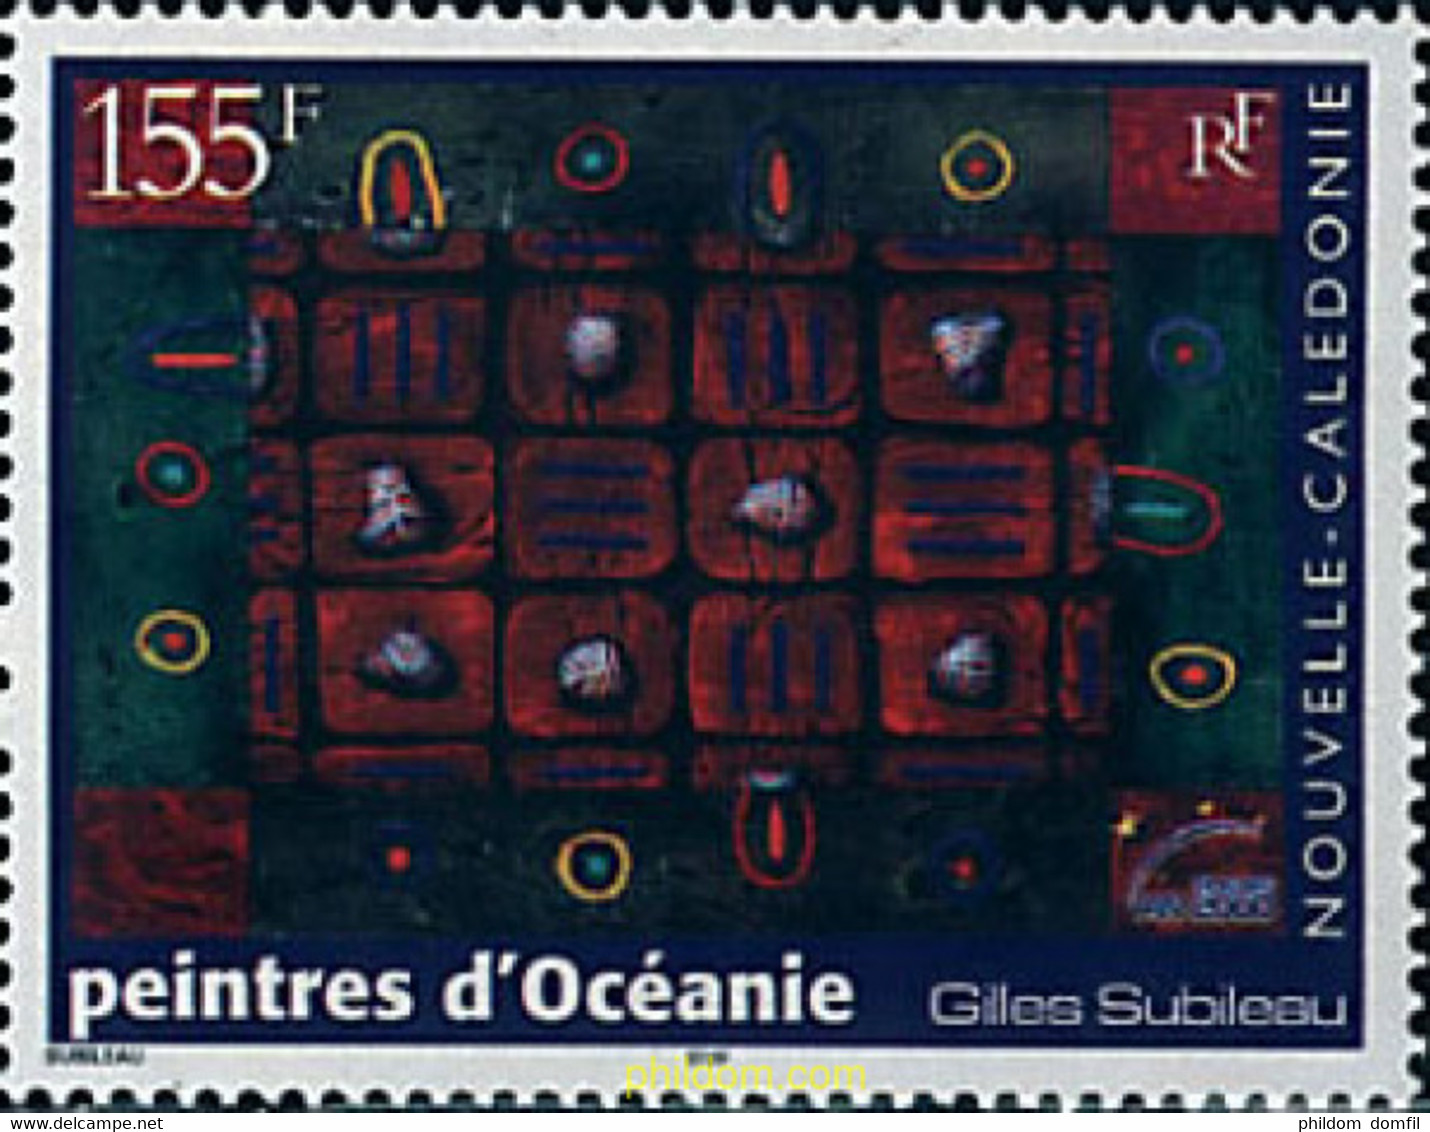 69298 MNH NUEVA CALEDONIA 2000 PINTURA DE OCEANIA - Usati